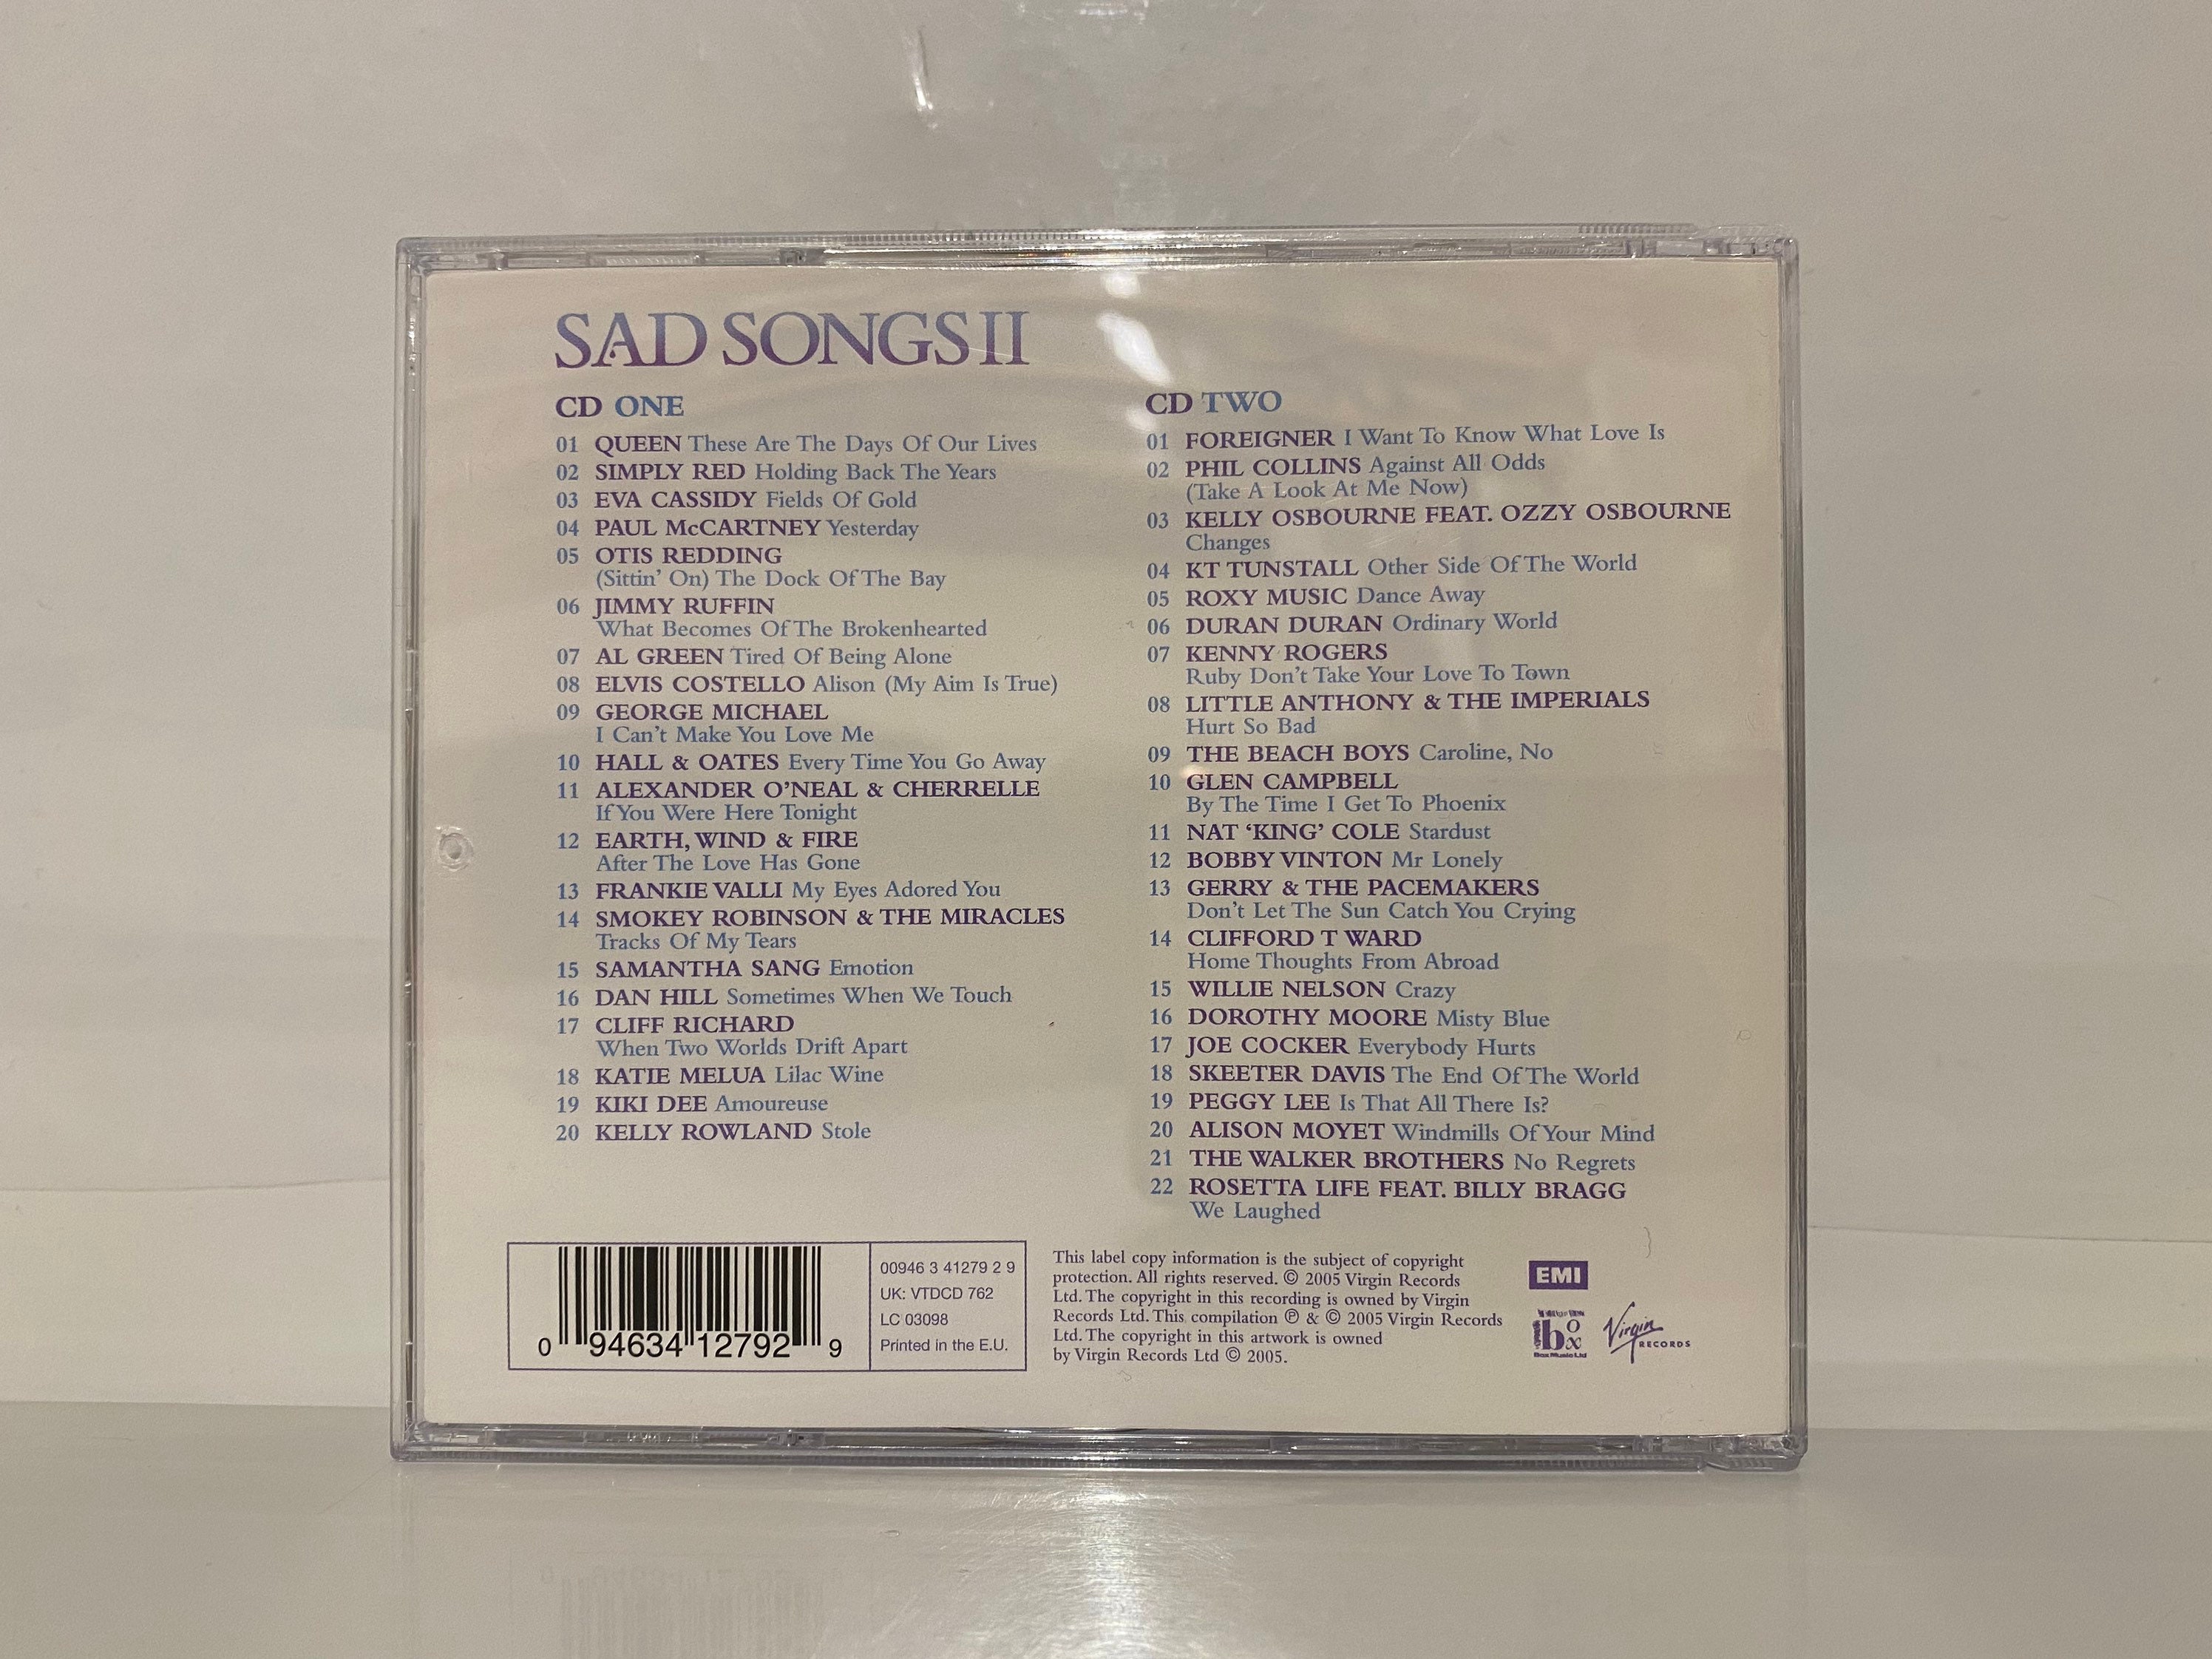 Sad Songs II CD Collection Album Genre Rock Funk Soul Pop Folk Country  Gifts Vintage Music